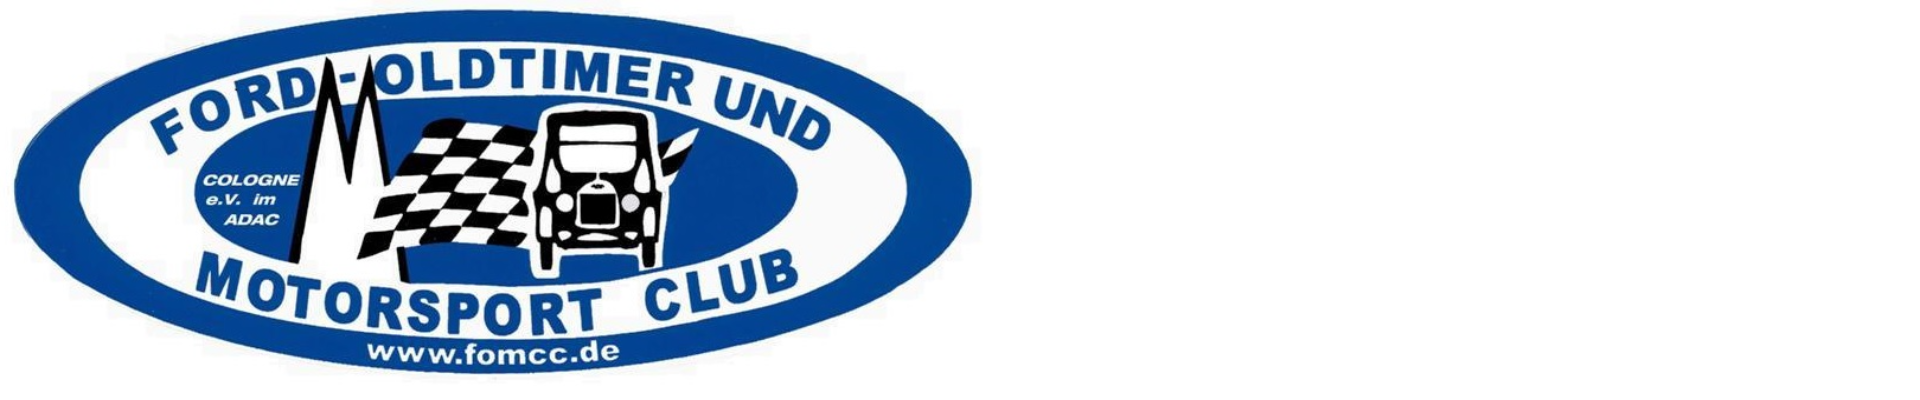 Ford Oldtimer und Motorsport Club Cologne e.V. im ADAC